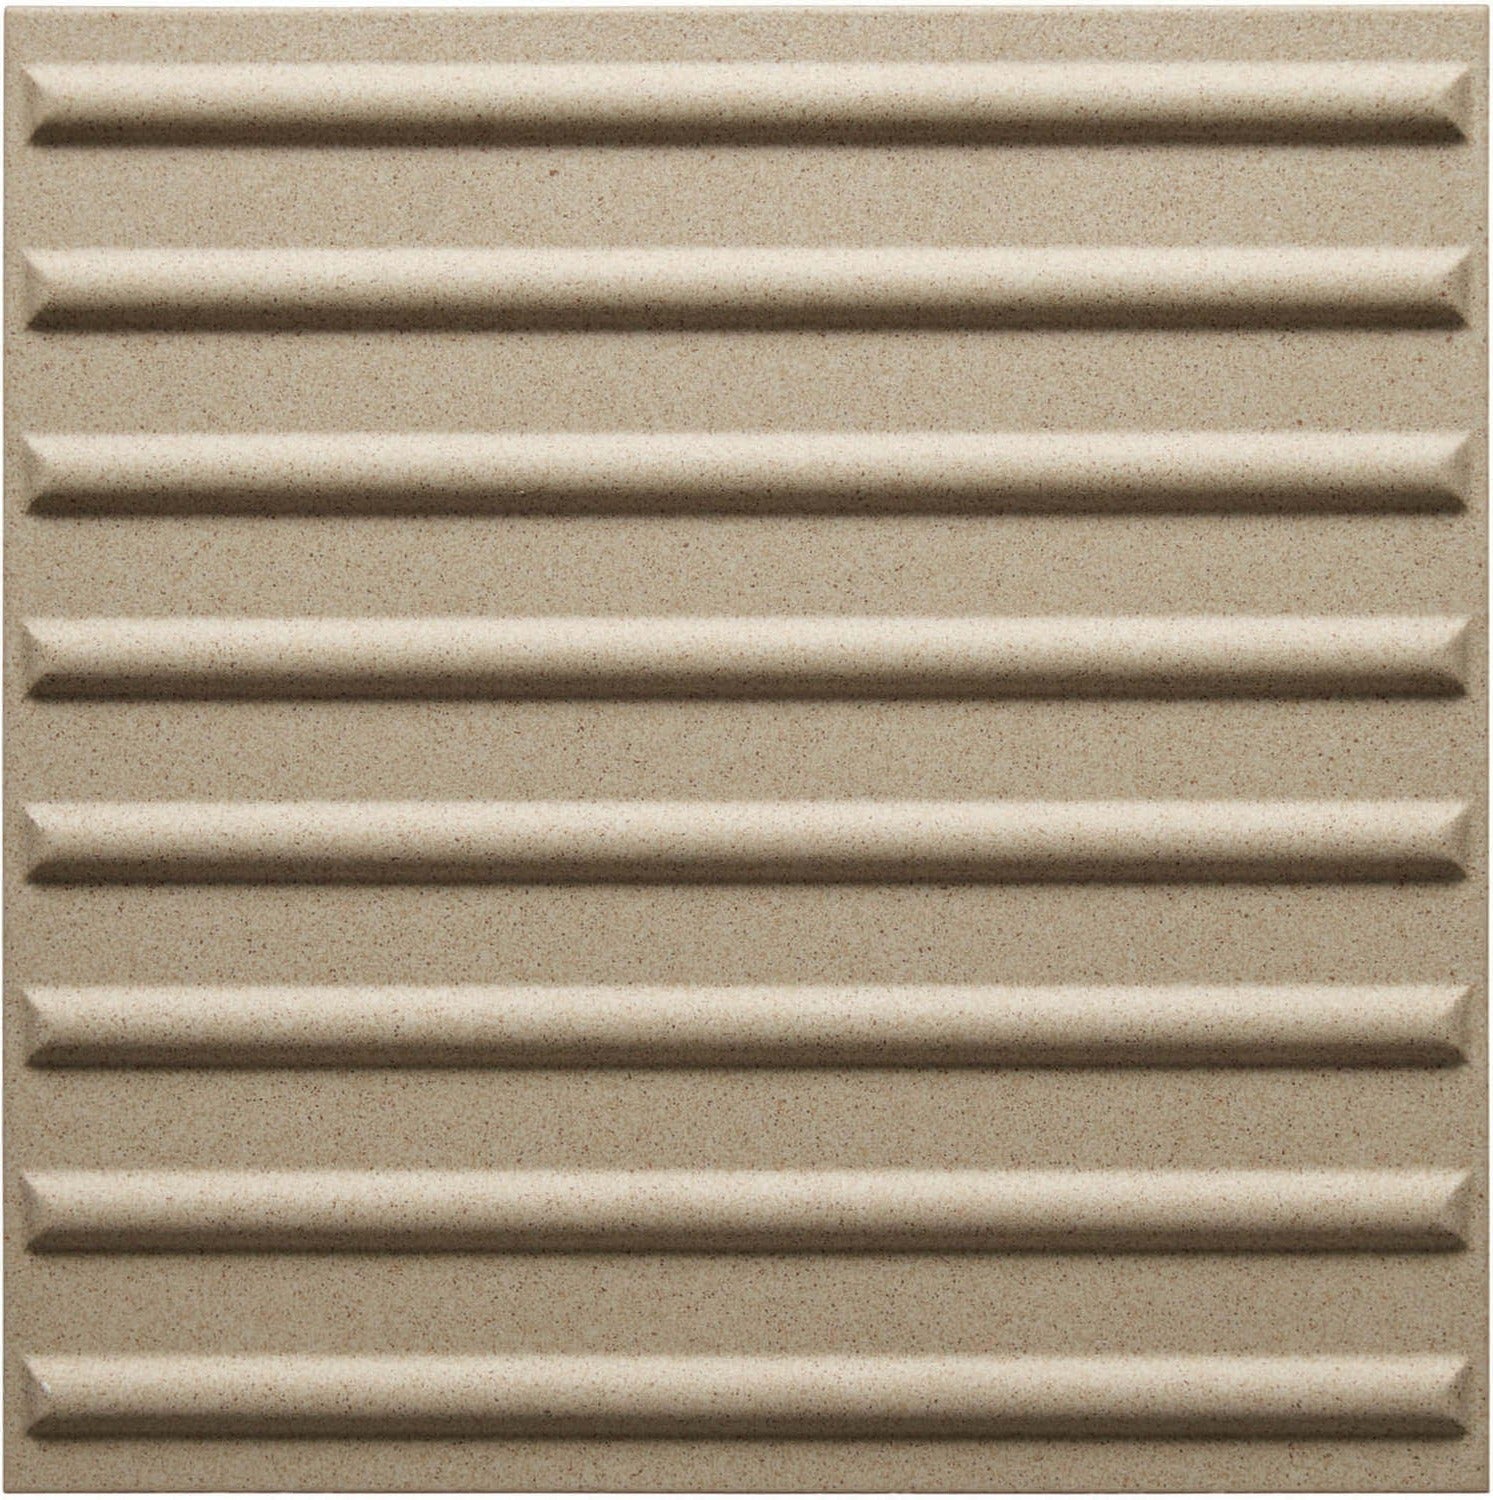 Dorset Woolliscroft Tactile Curdoroy Sand Slip Resistant Quarry Tile 400x400mm